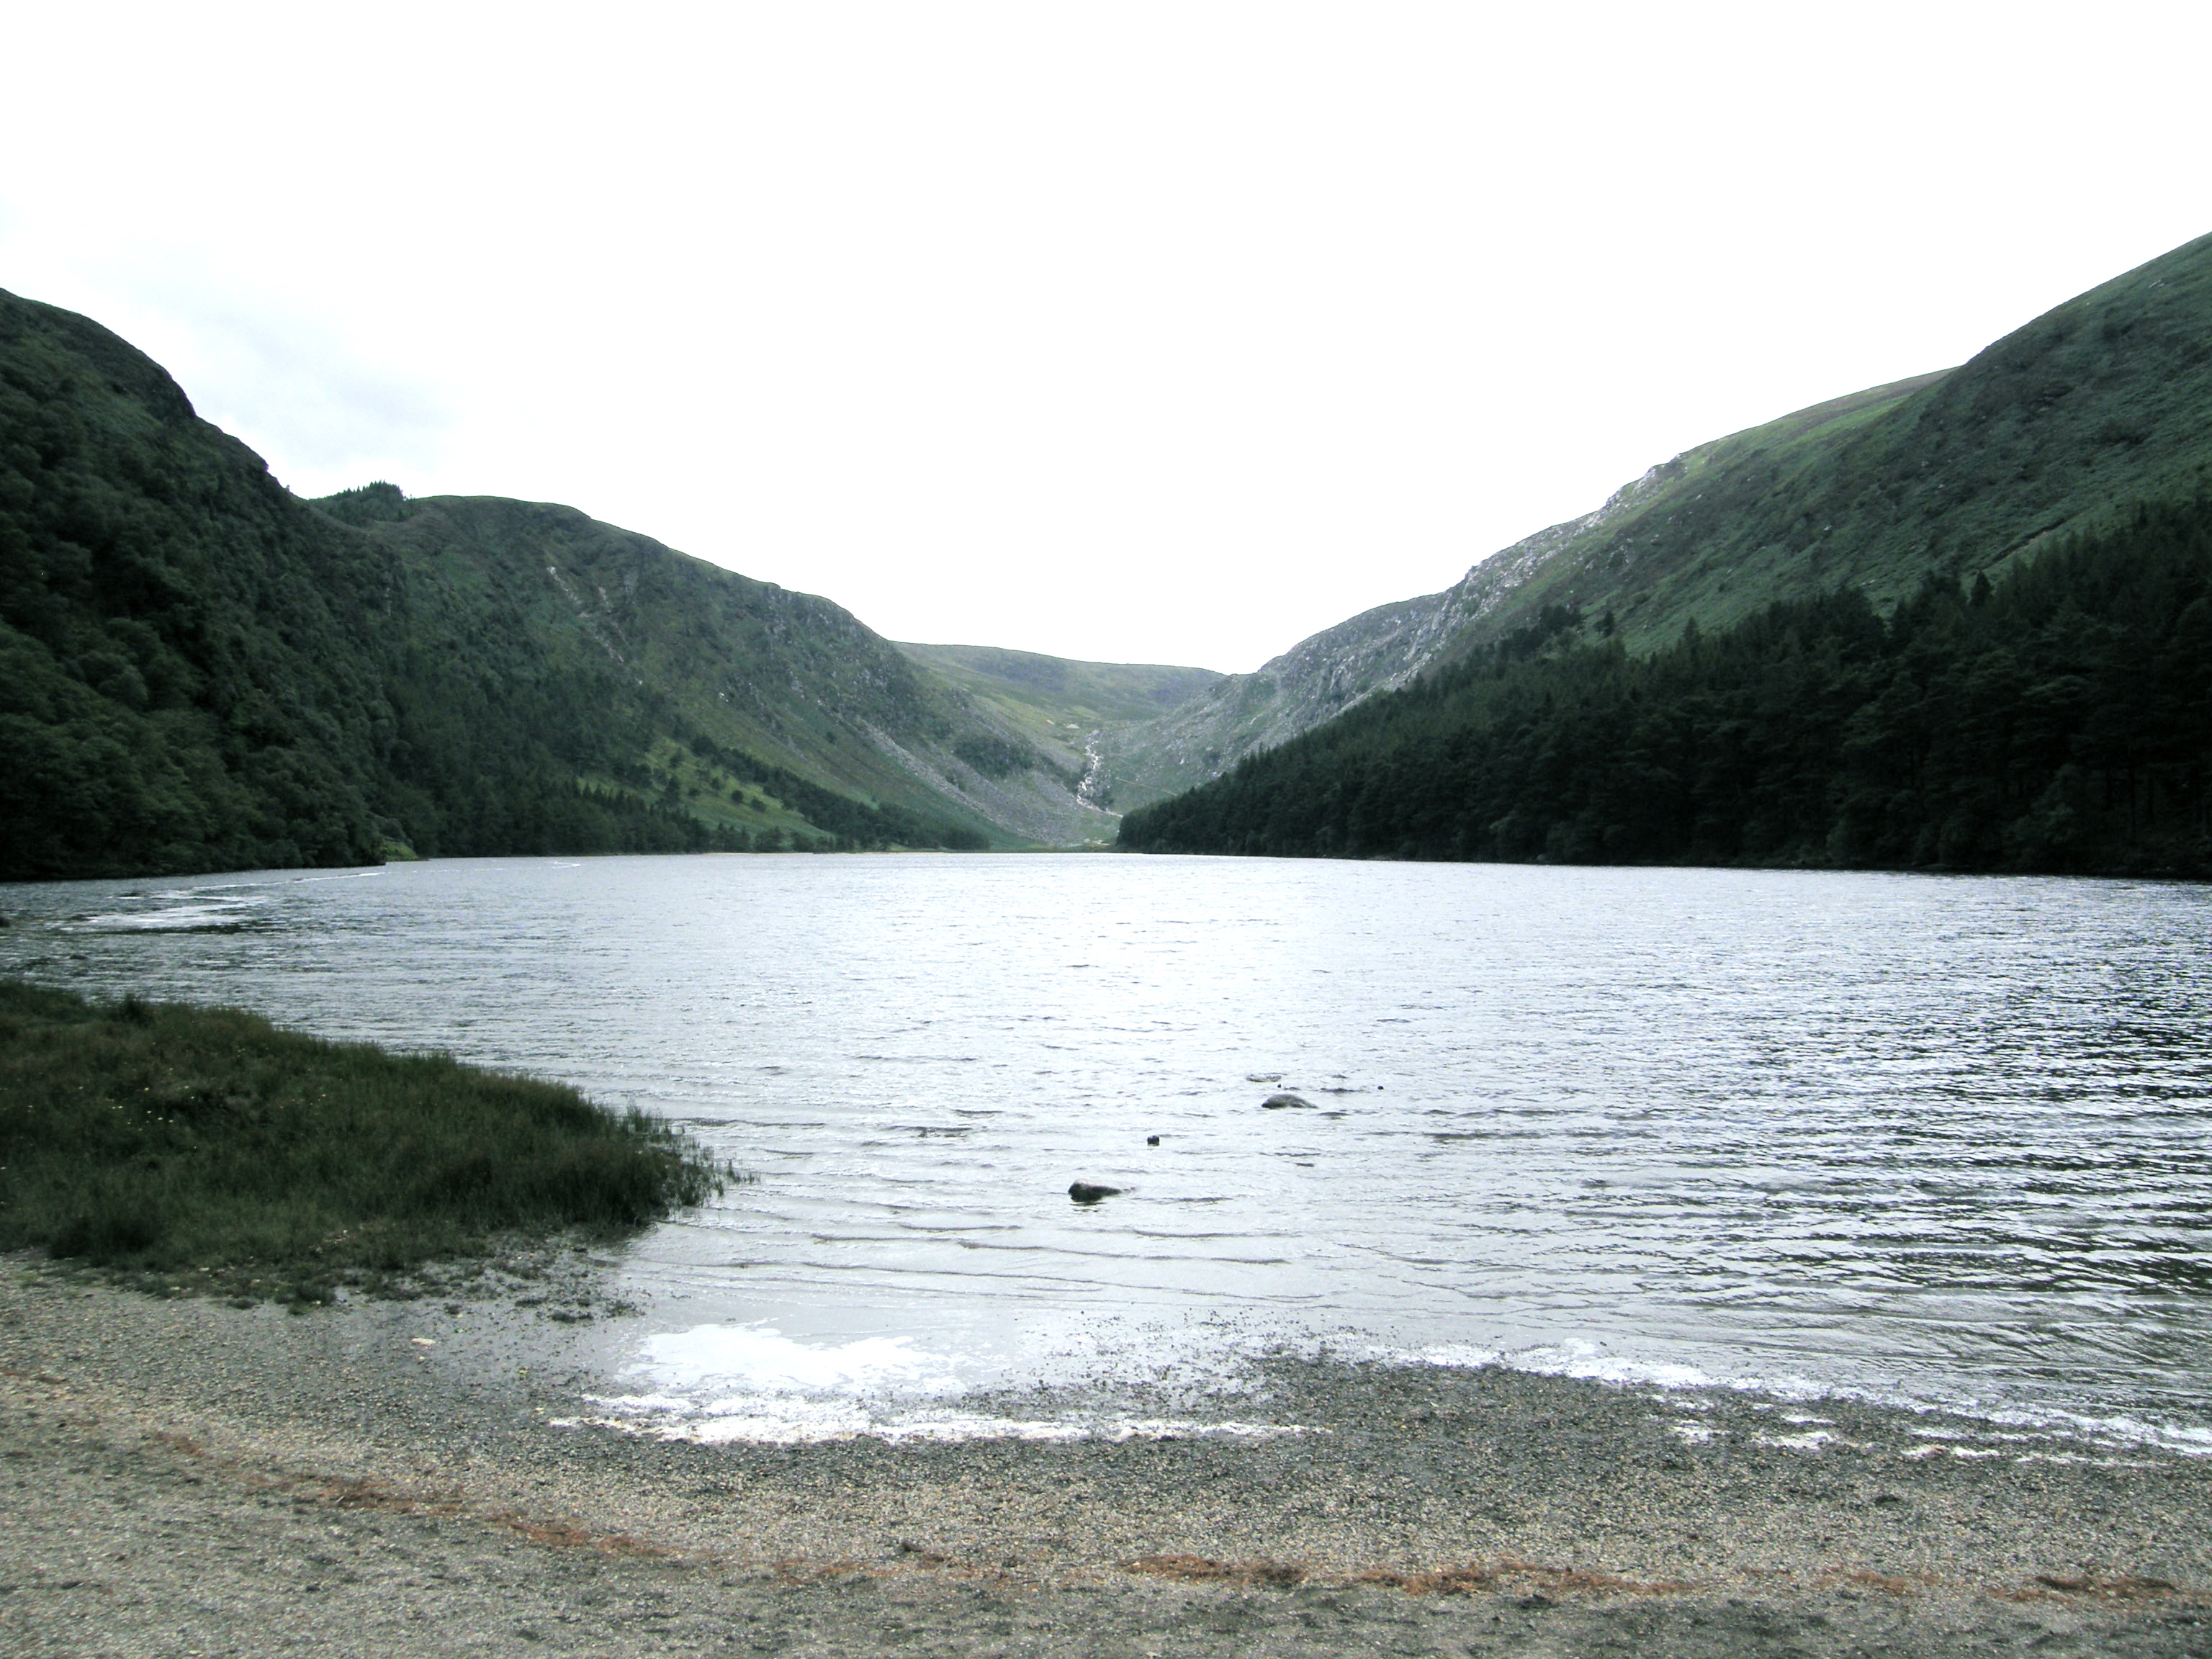 The Upper Lake